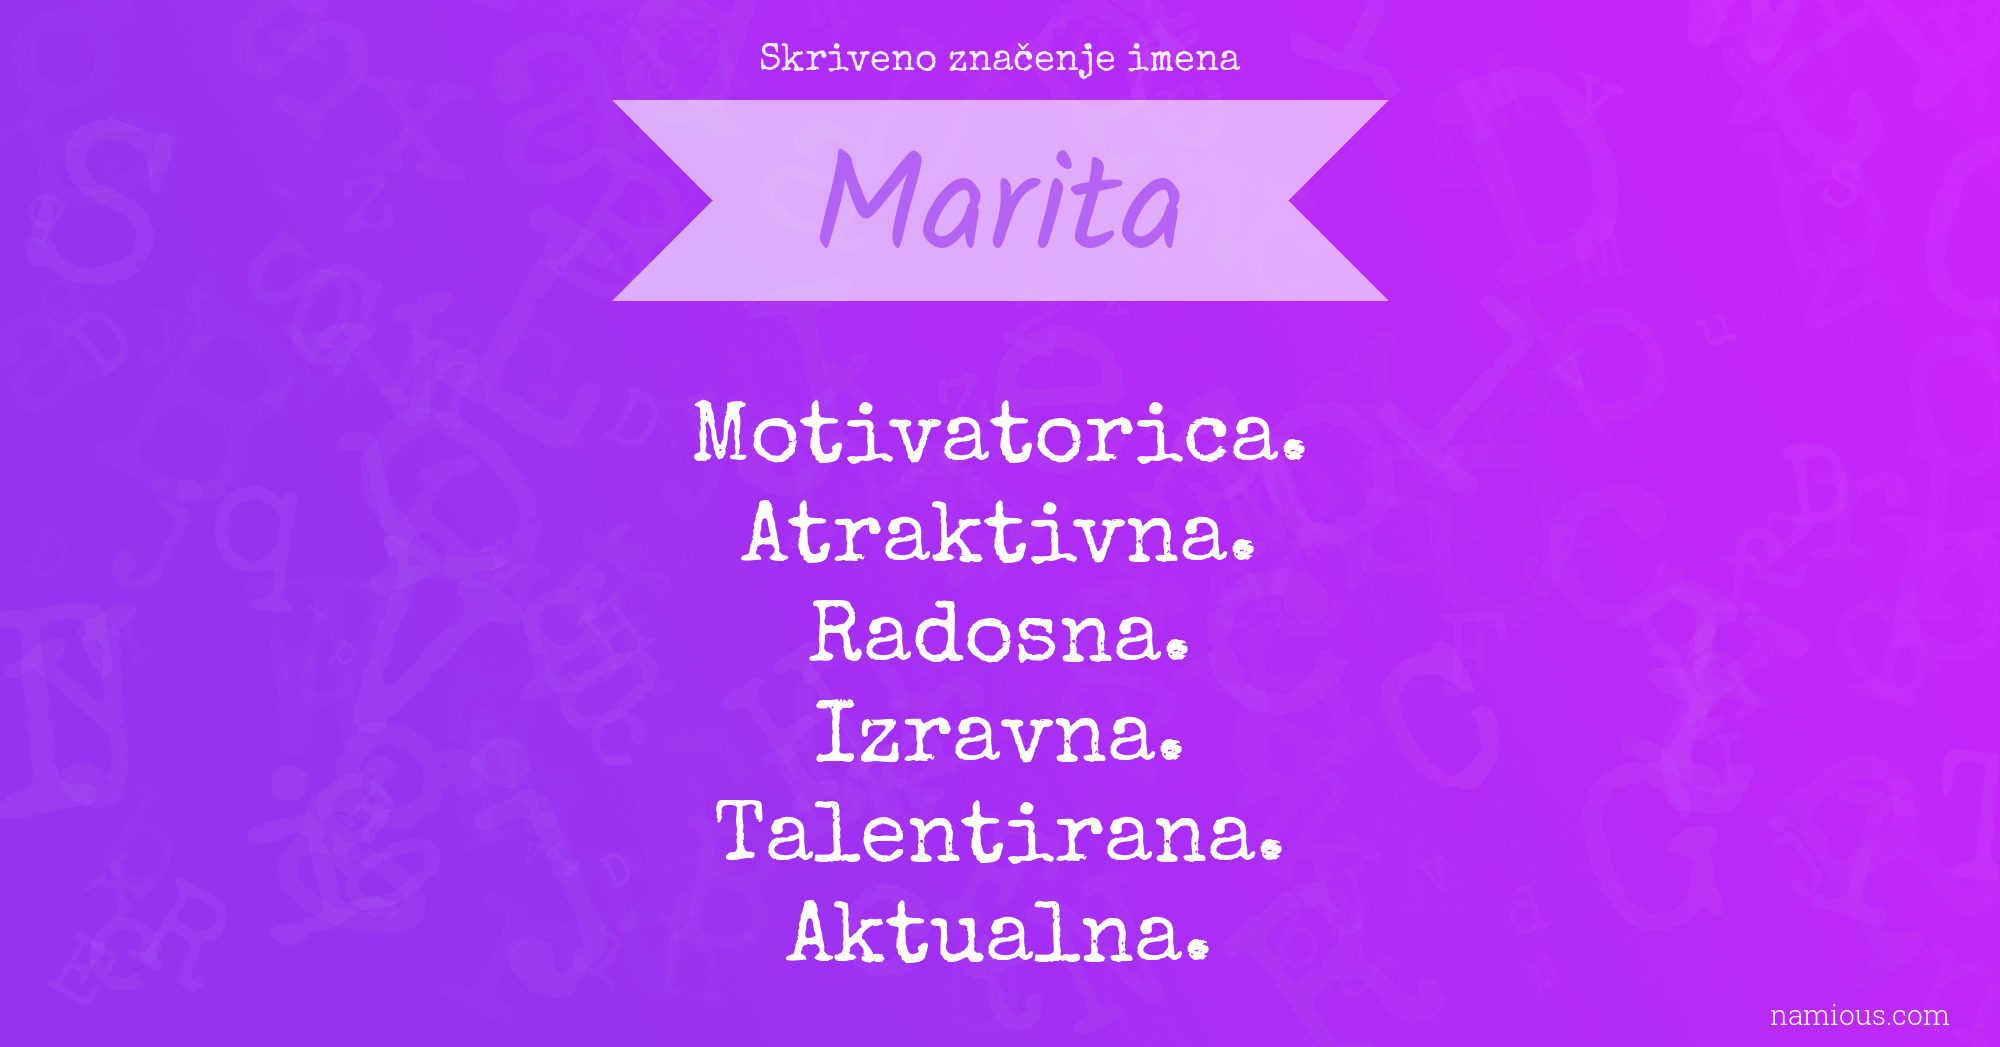 Skriveno značenje imena Marita